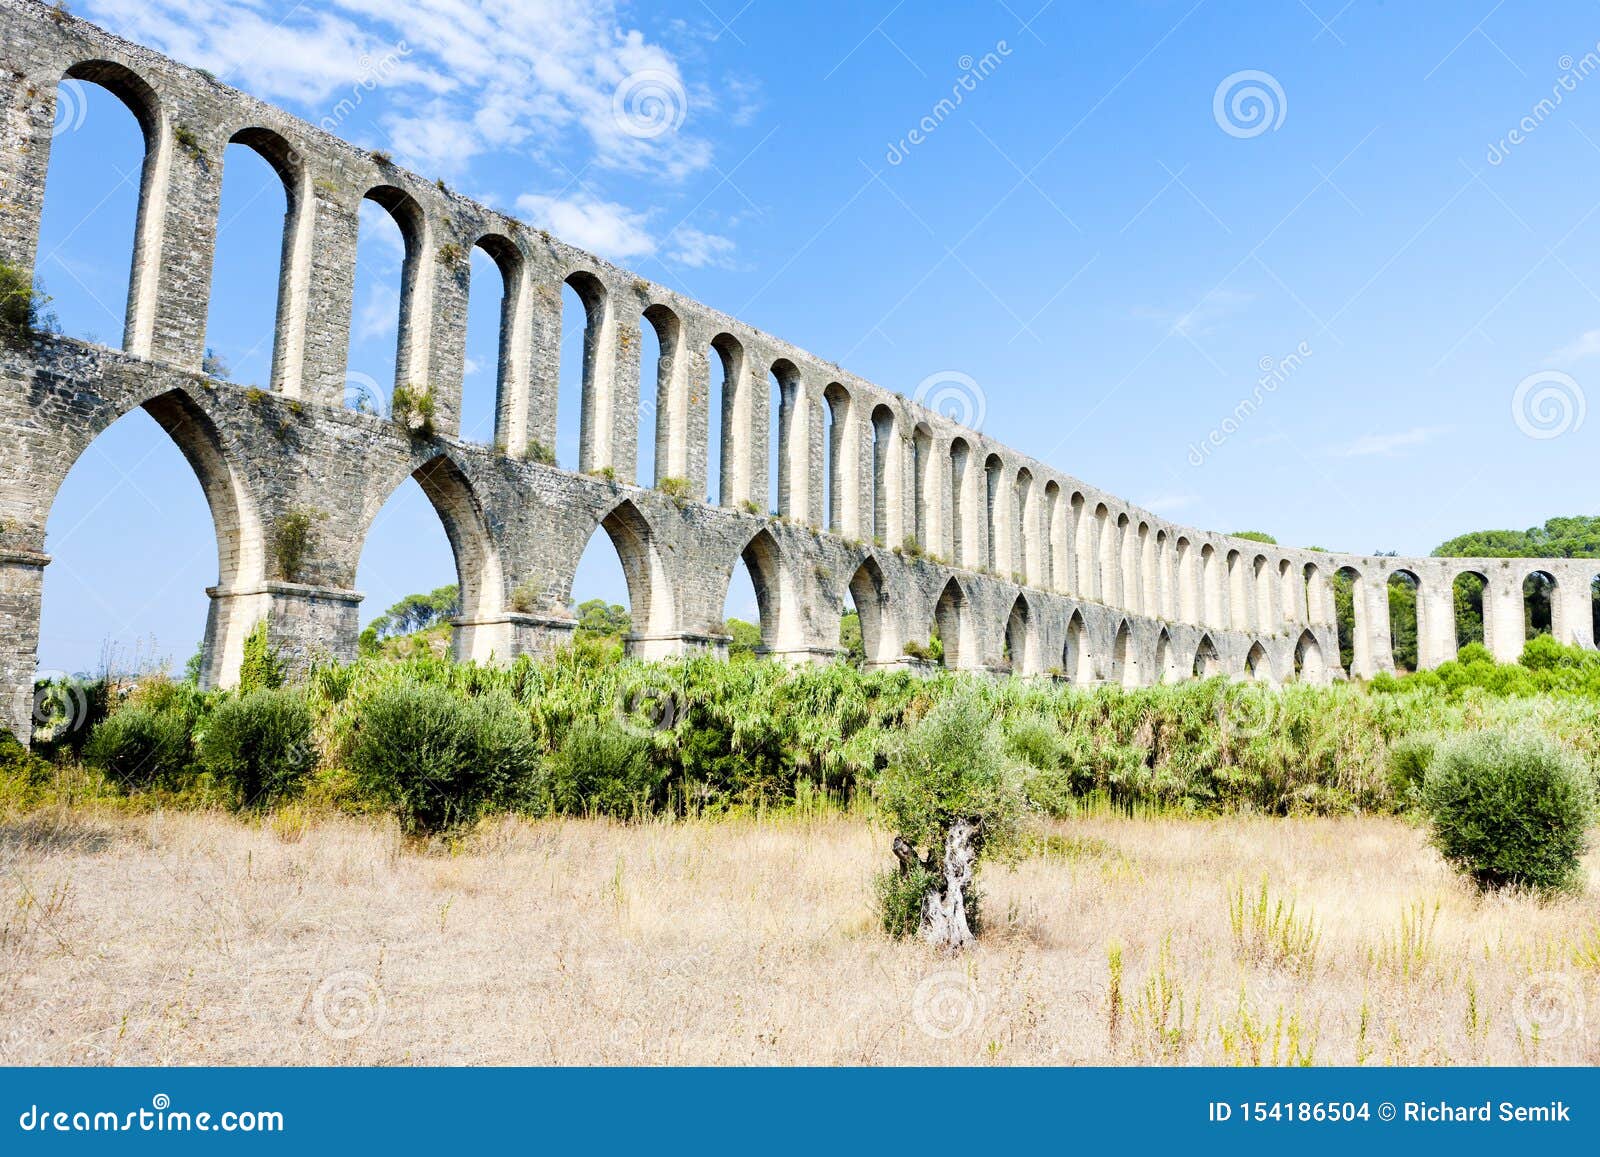 pegoes aqueduct, estremadura, portugal